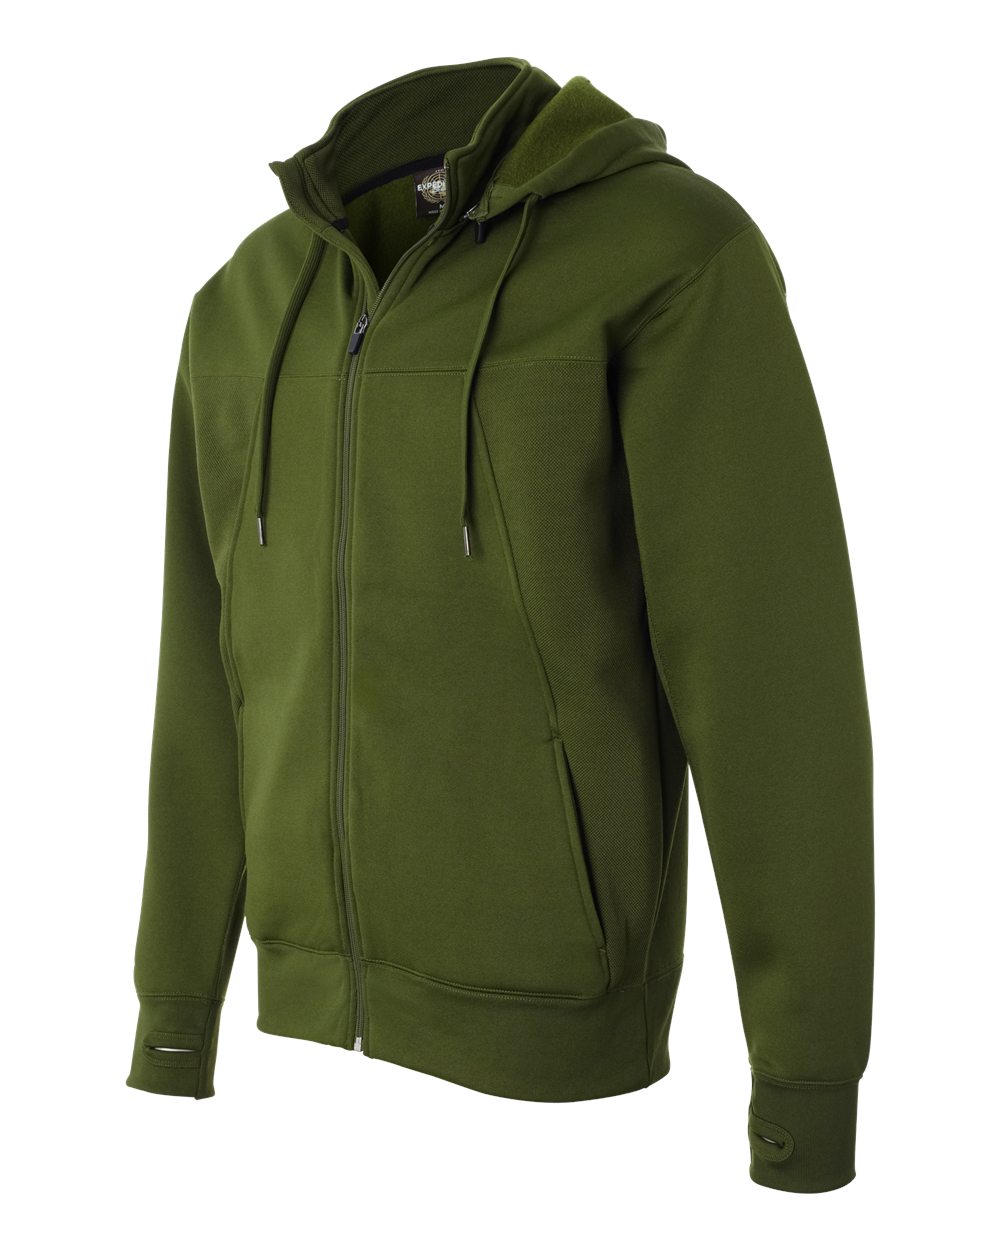 Independent Trading Co EXP80PTZ - Hi-Tech Full-Zip Hooded Sweatshirt